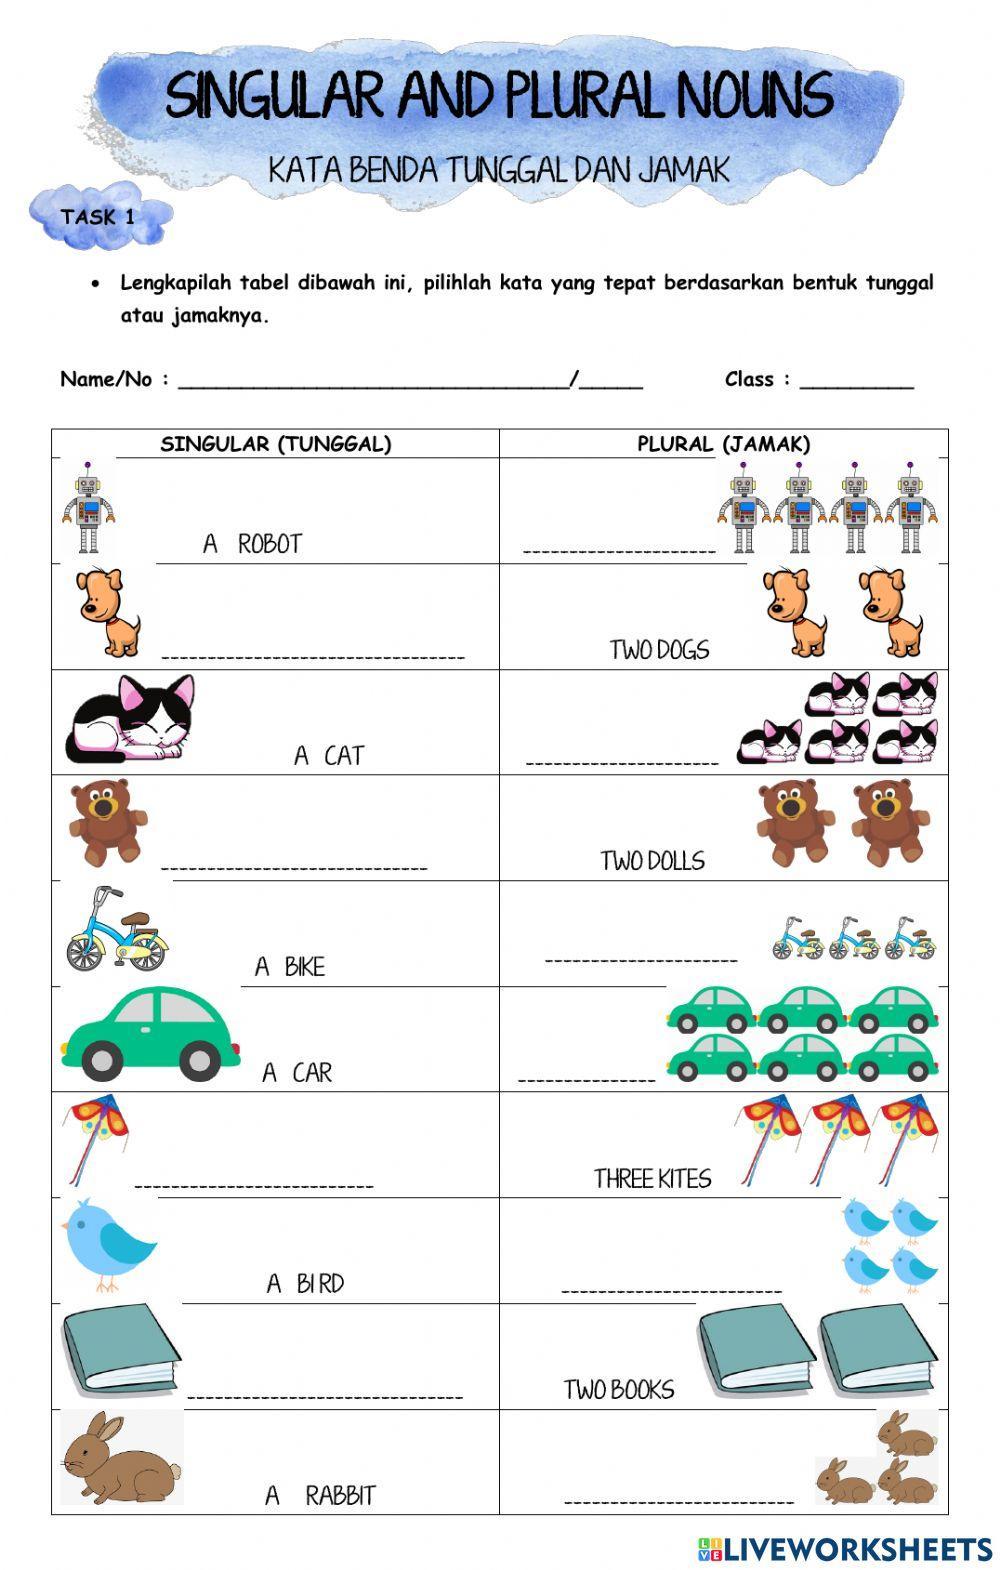 Singular and Plural online activity for Grade 1 | Live Worksheets